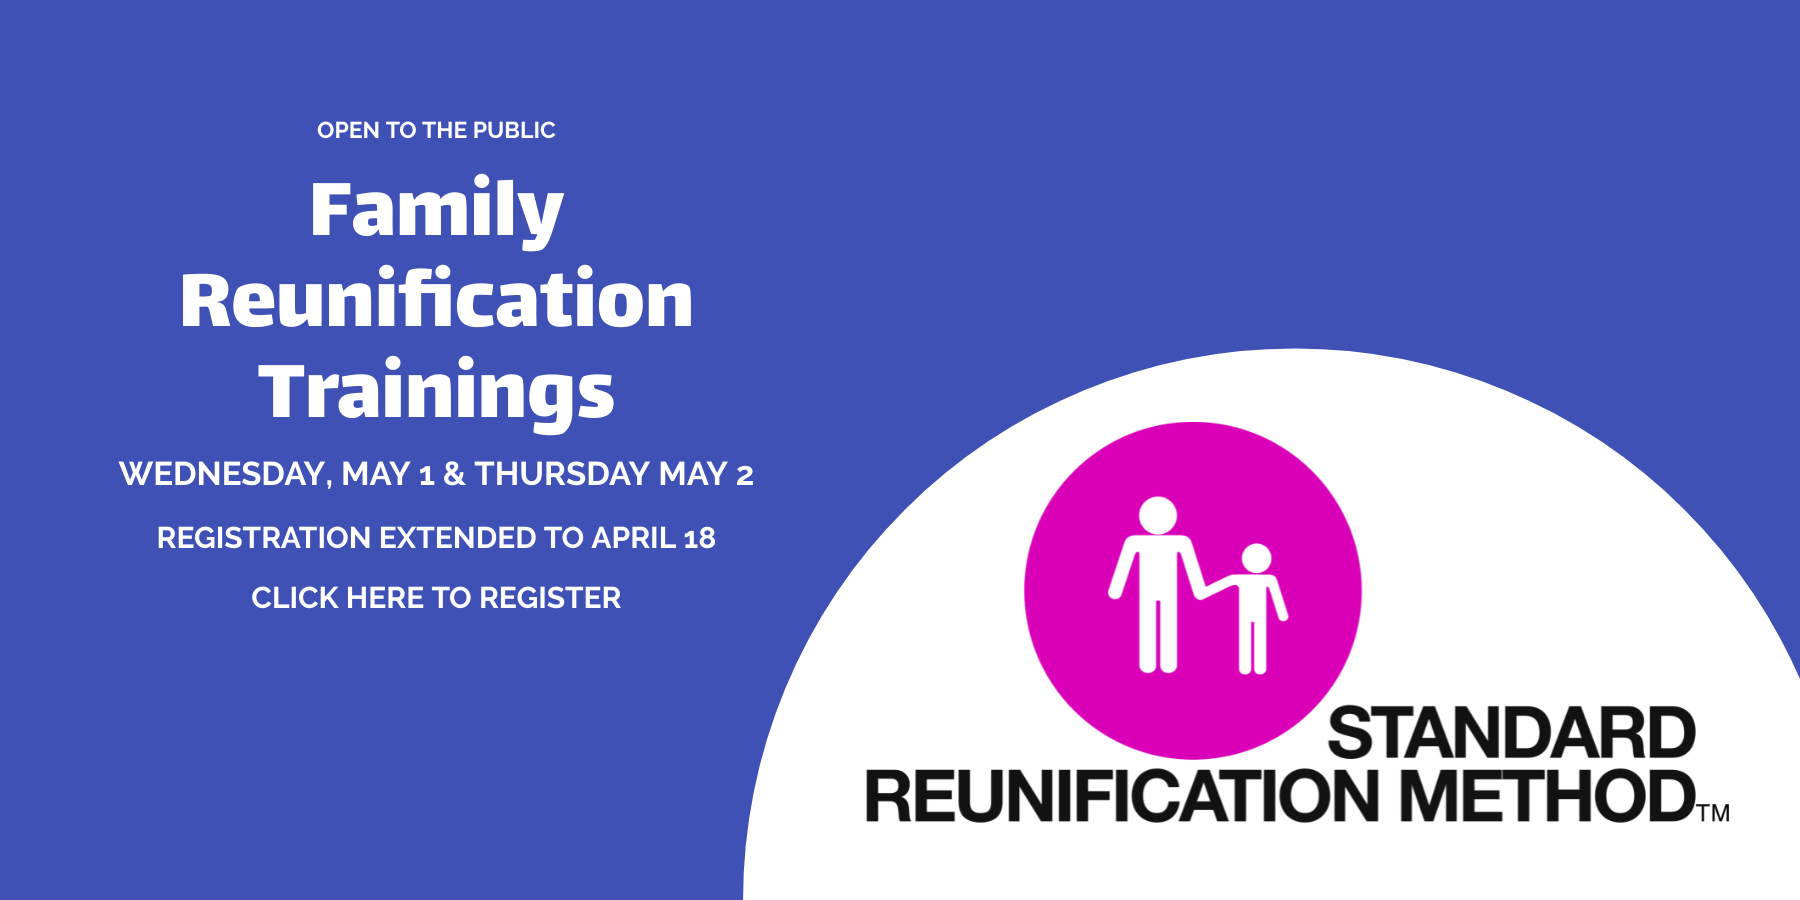 Slide linking to Family Reunification Training registration website